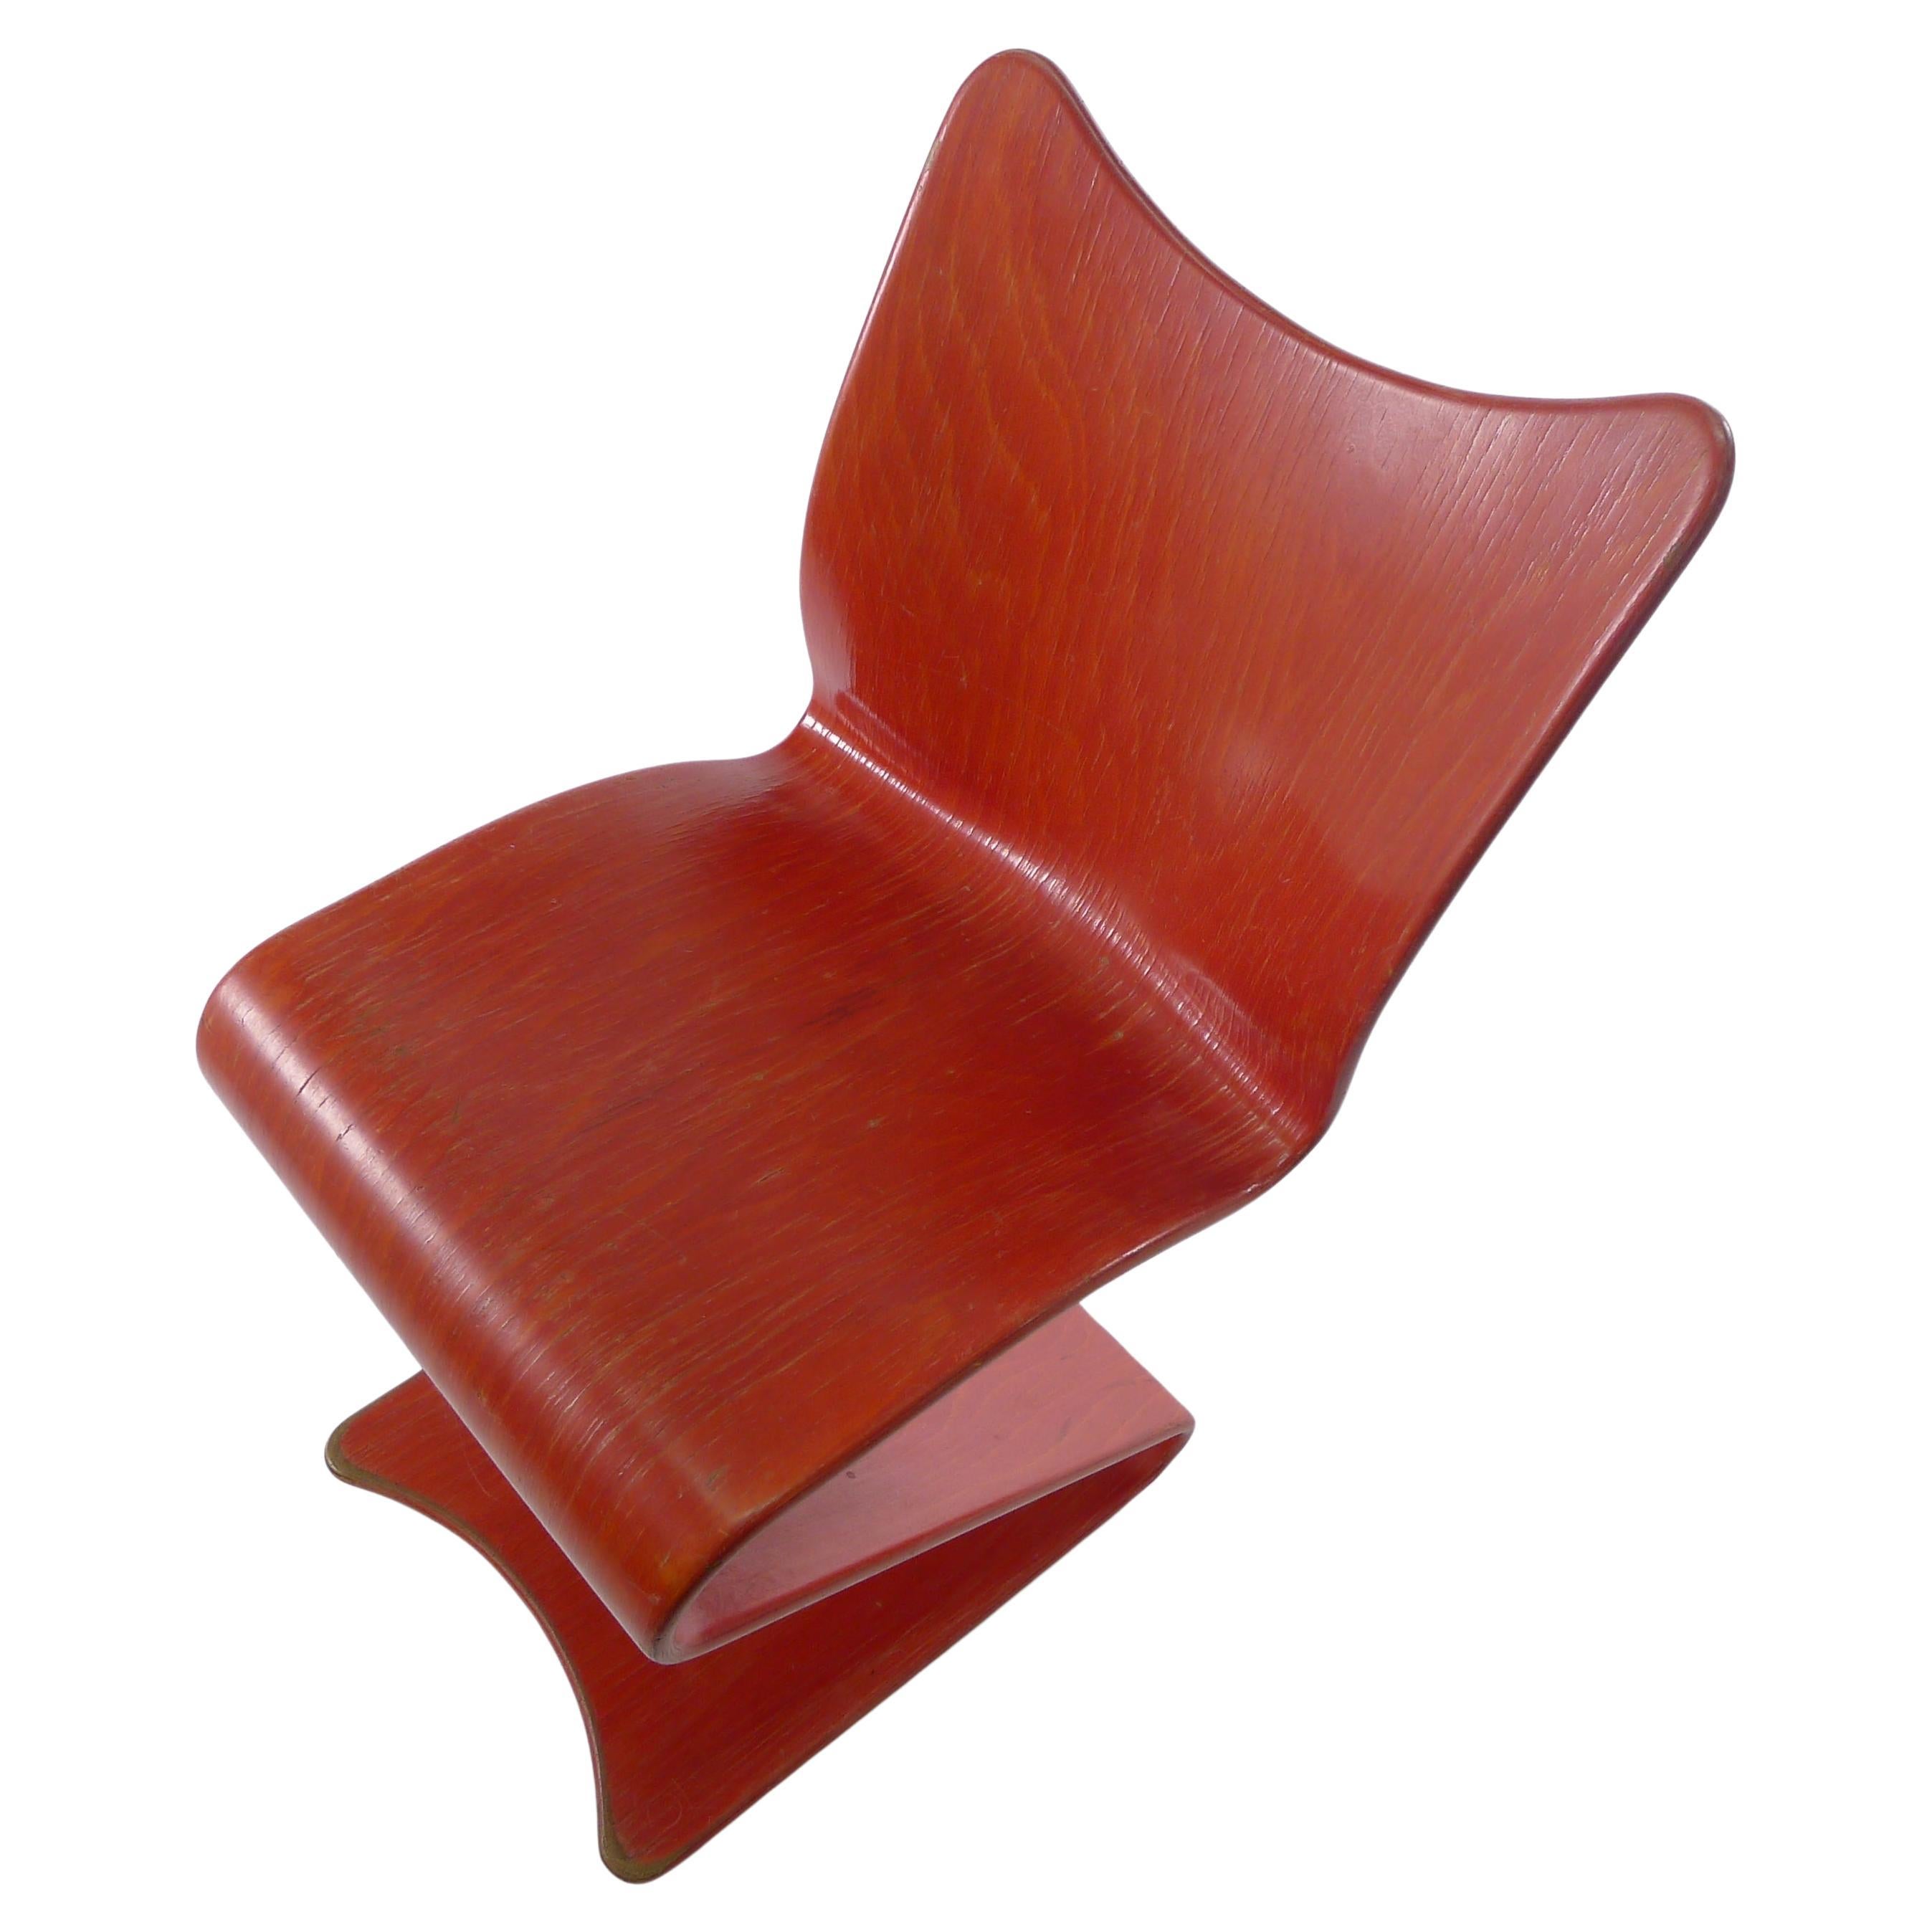 Rare Verner Panton plywood S chair, model 275, 1956, completely original, Thonet